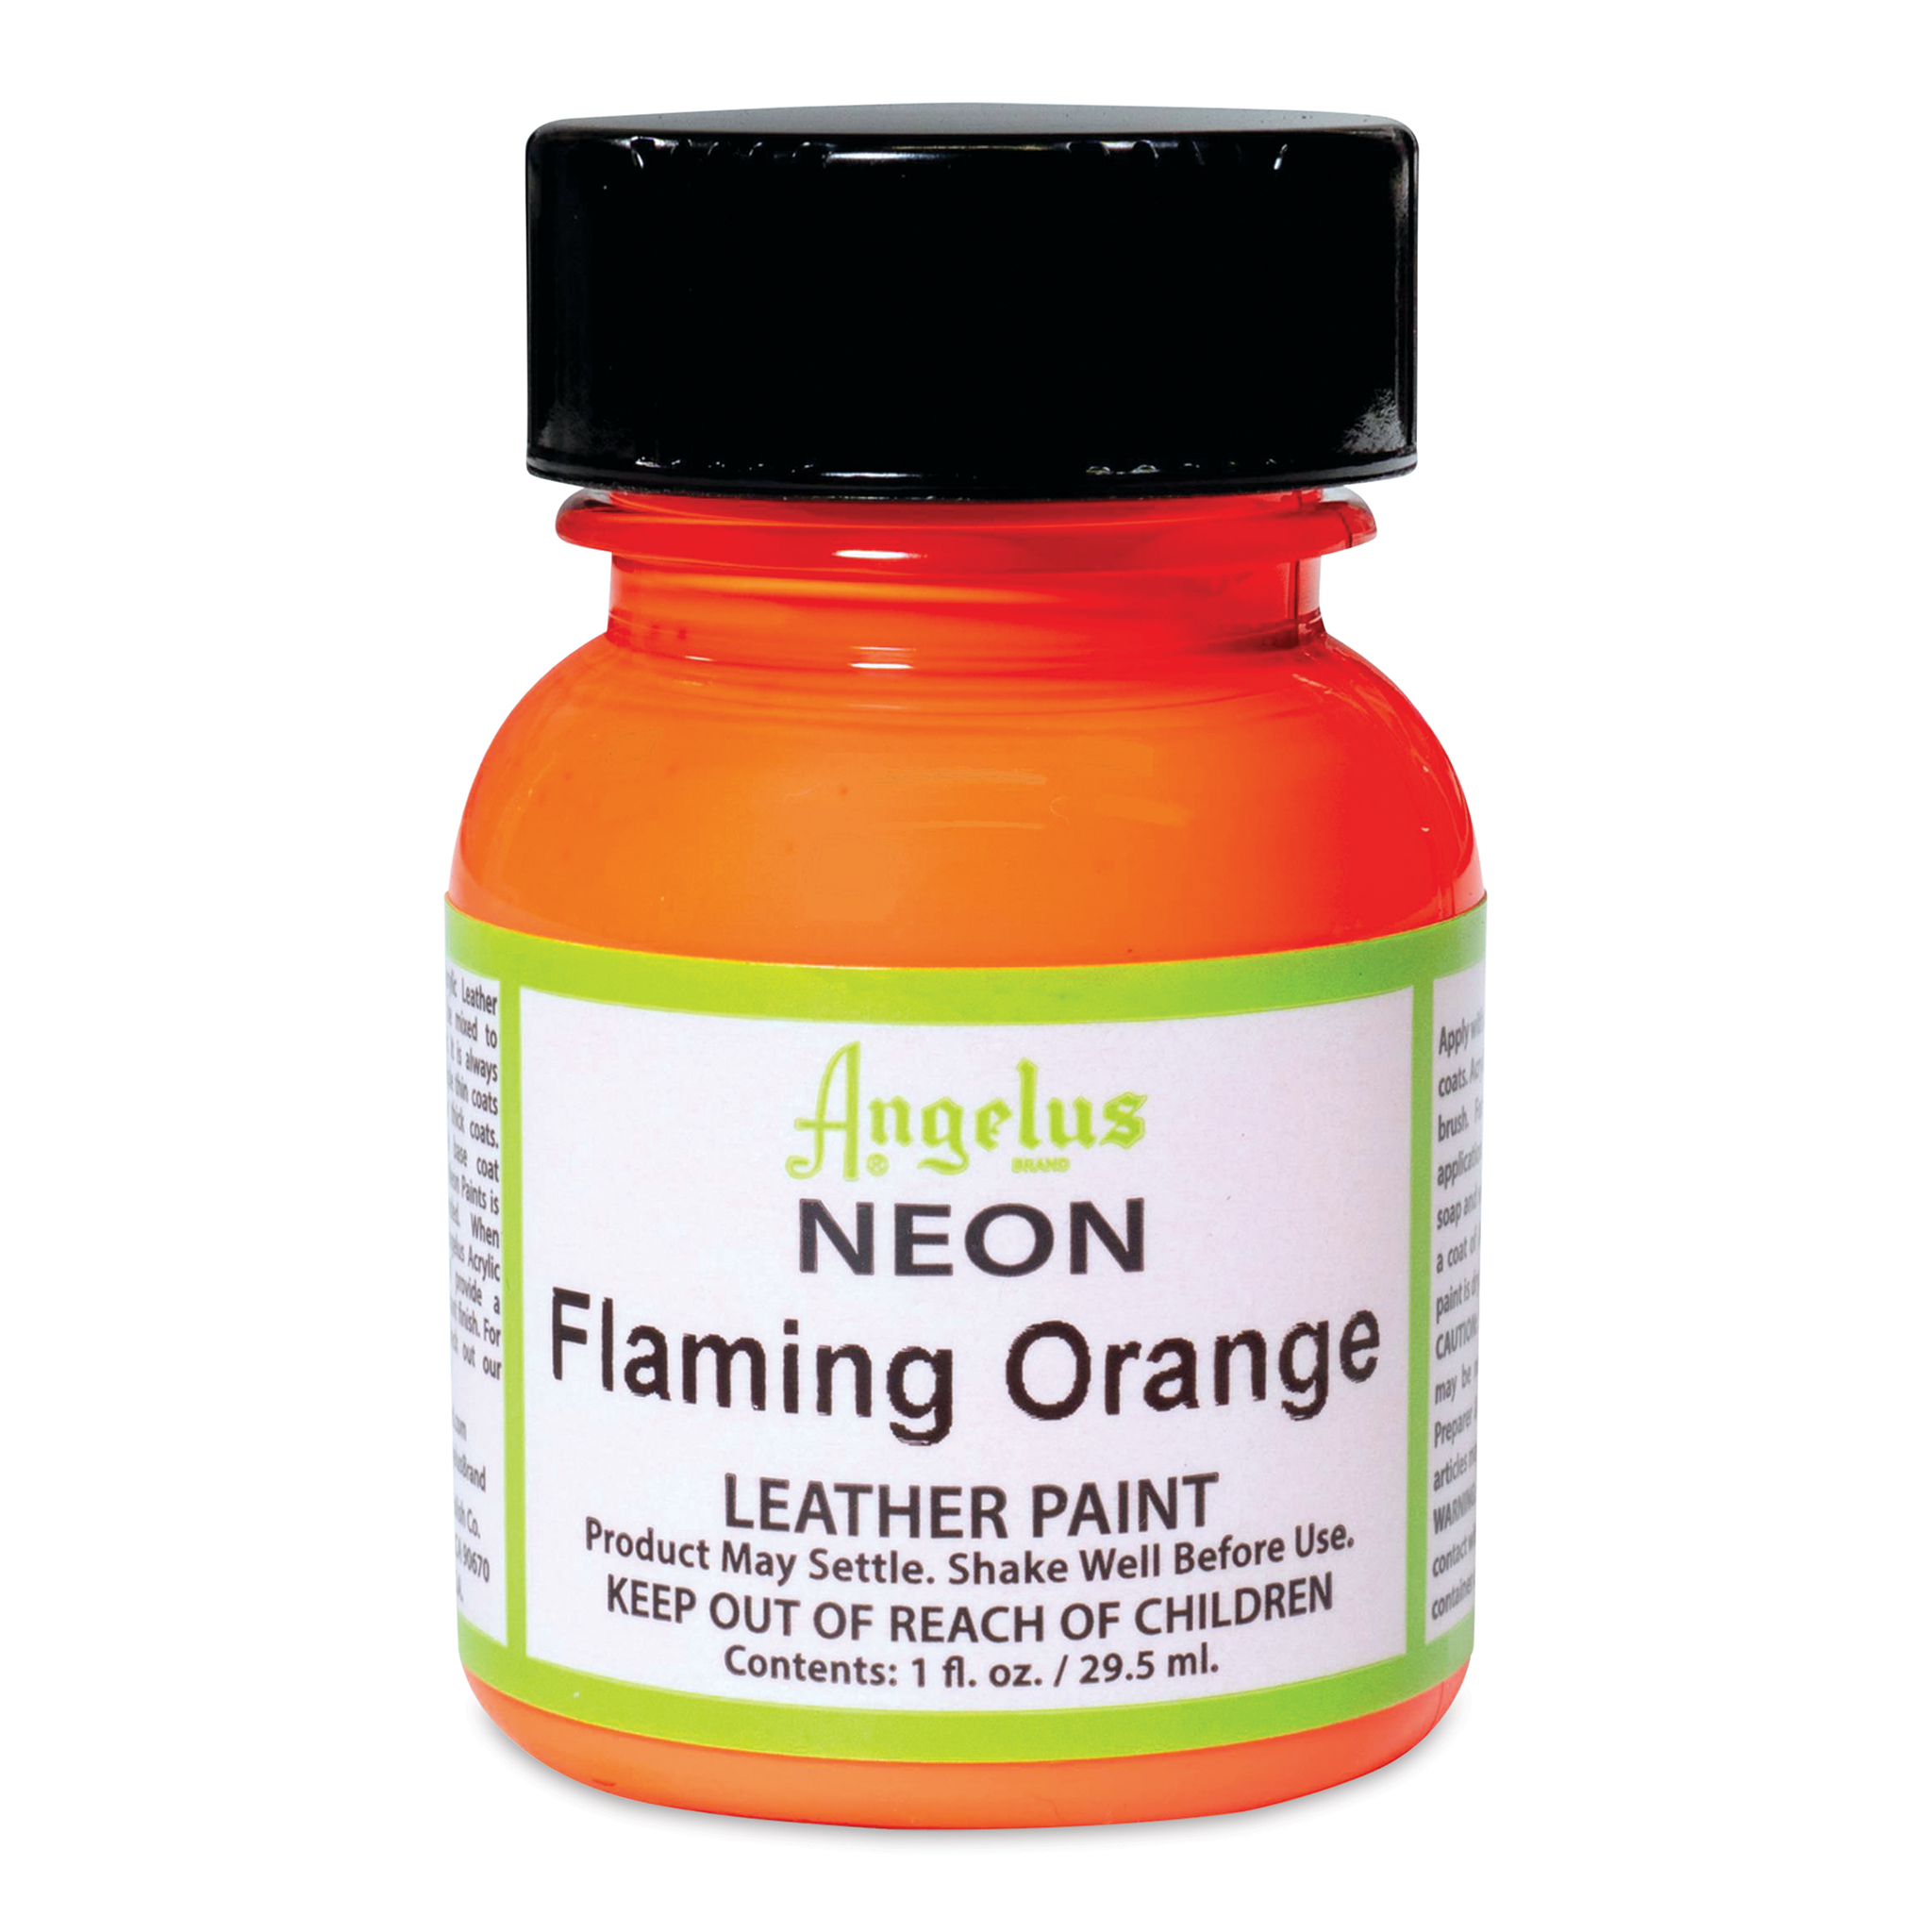 Angelus Neon-1 oz Leather Paint, Flaming Orange